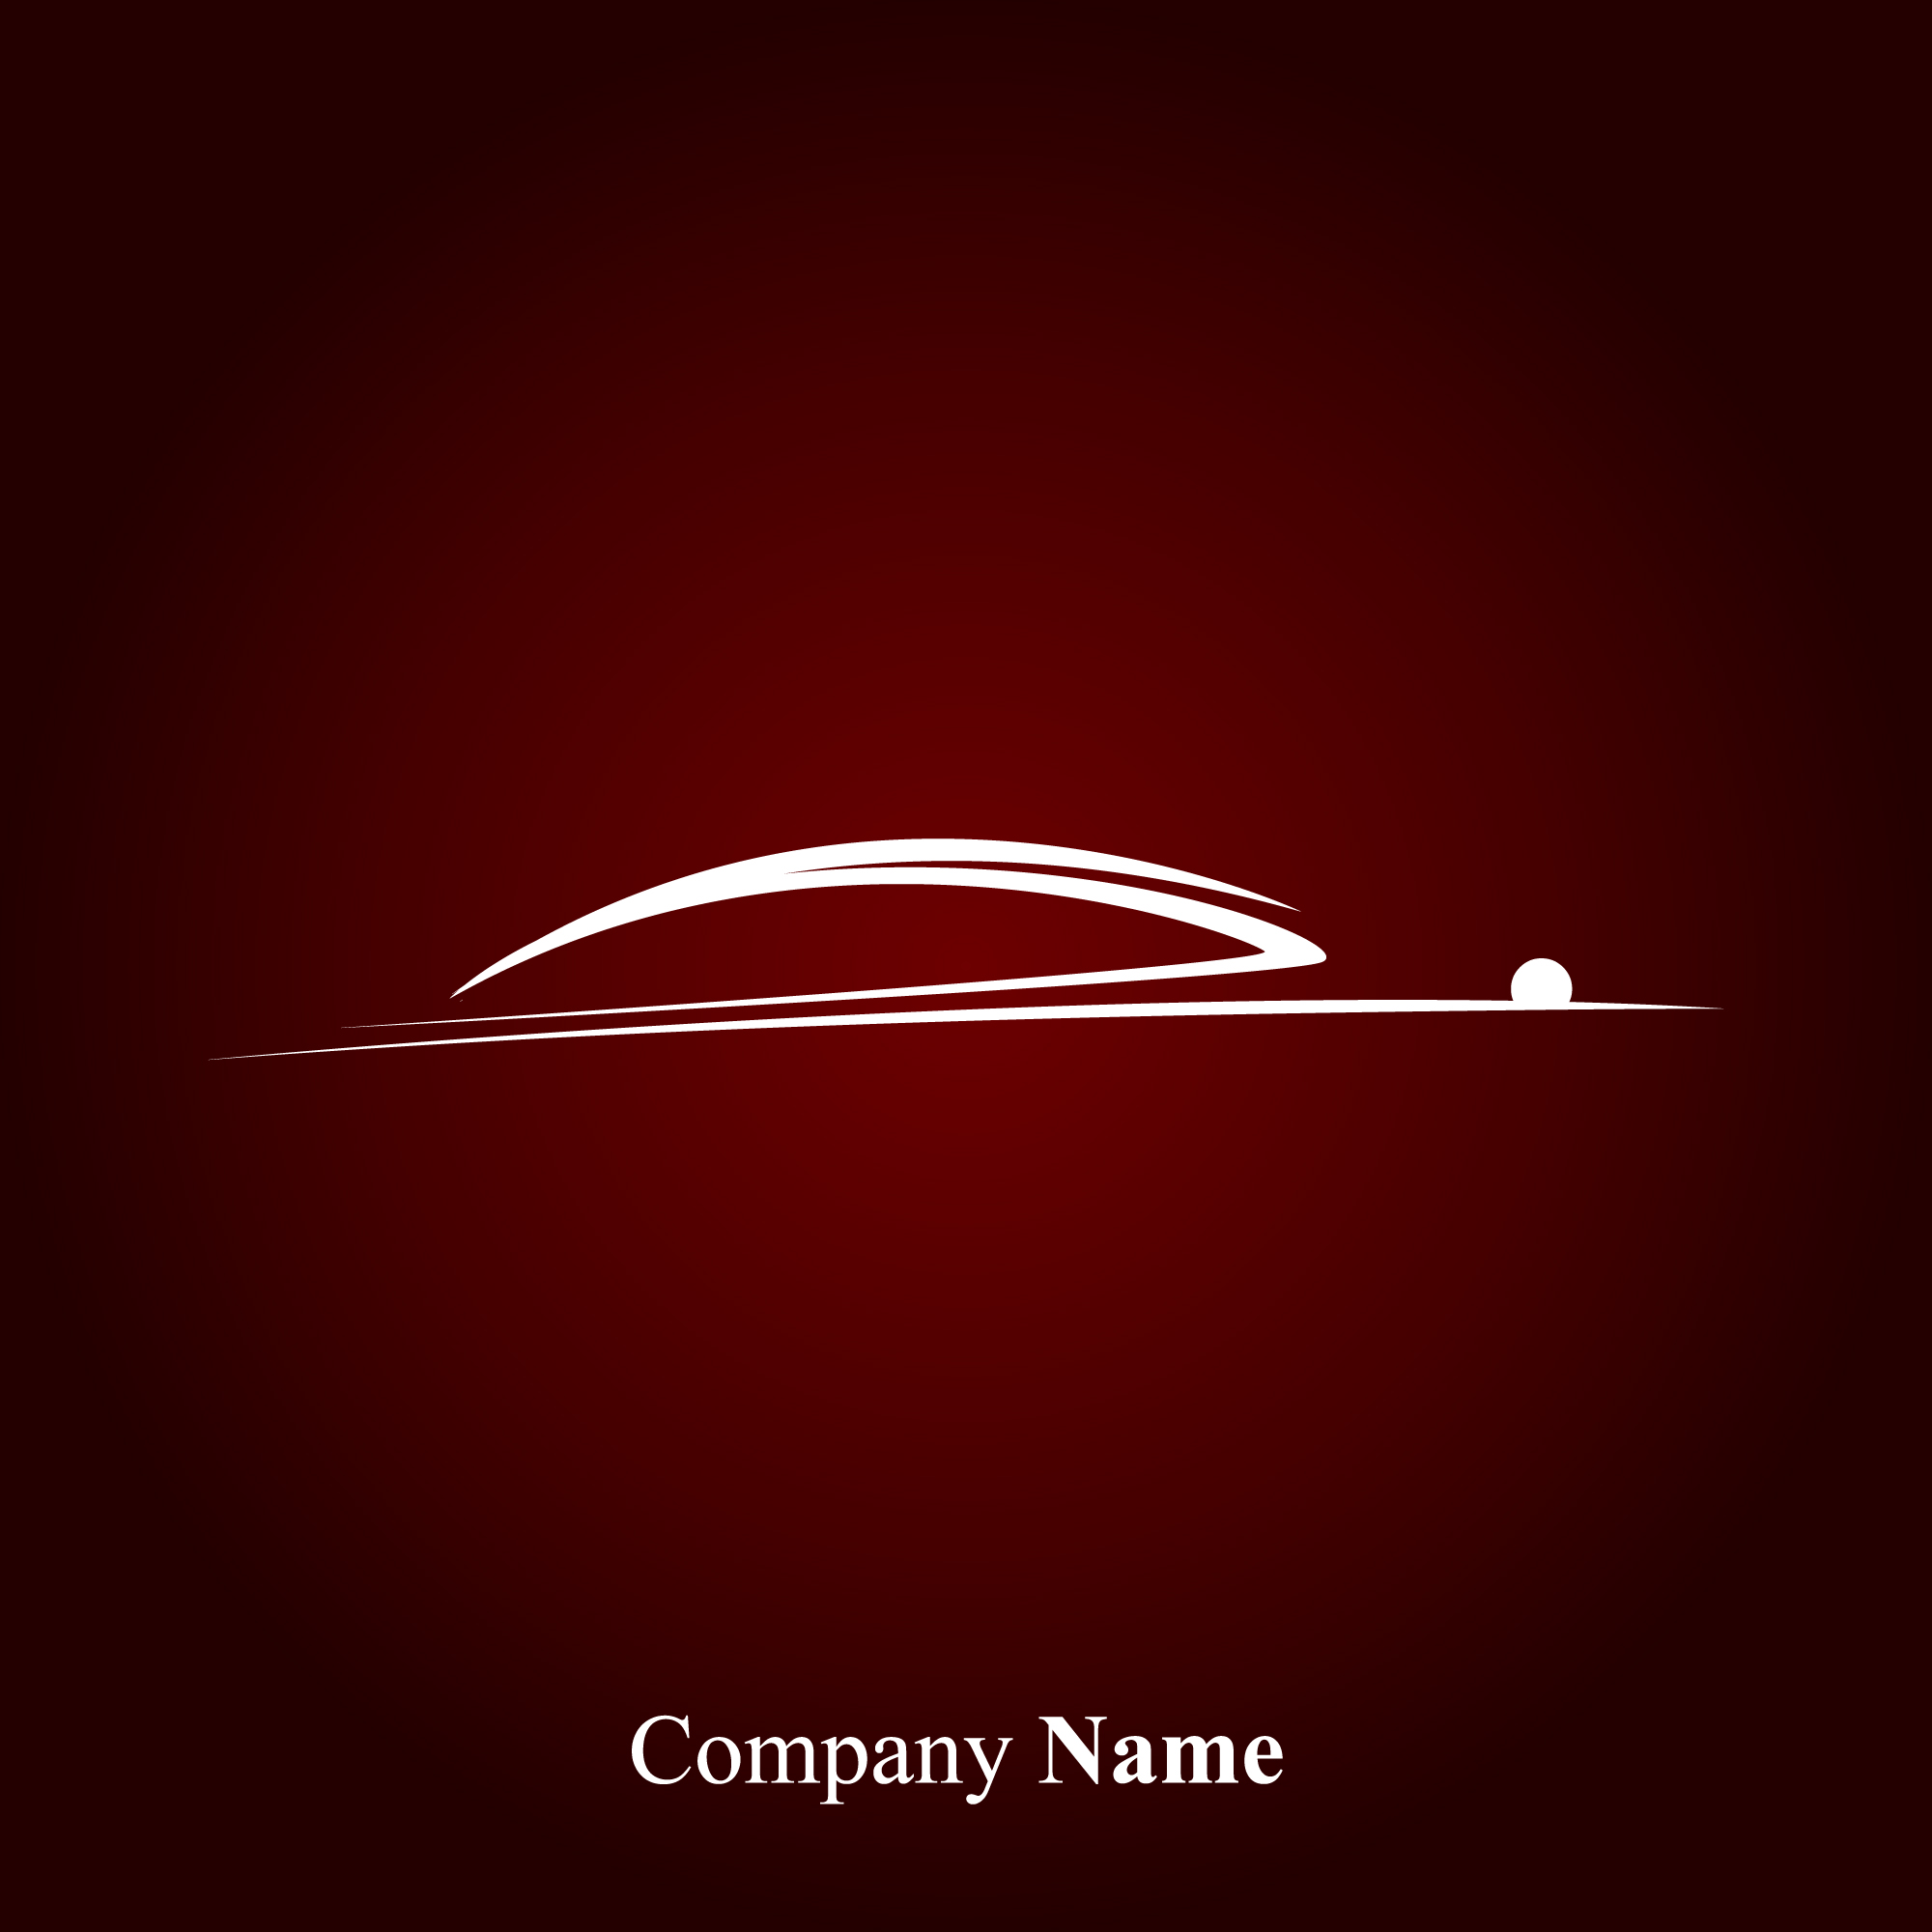 Creative Car logos design vector 04 free download